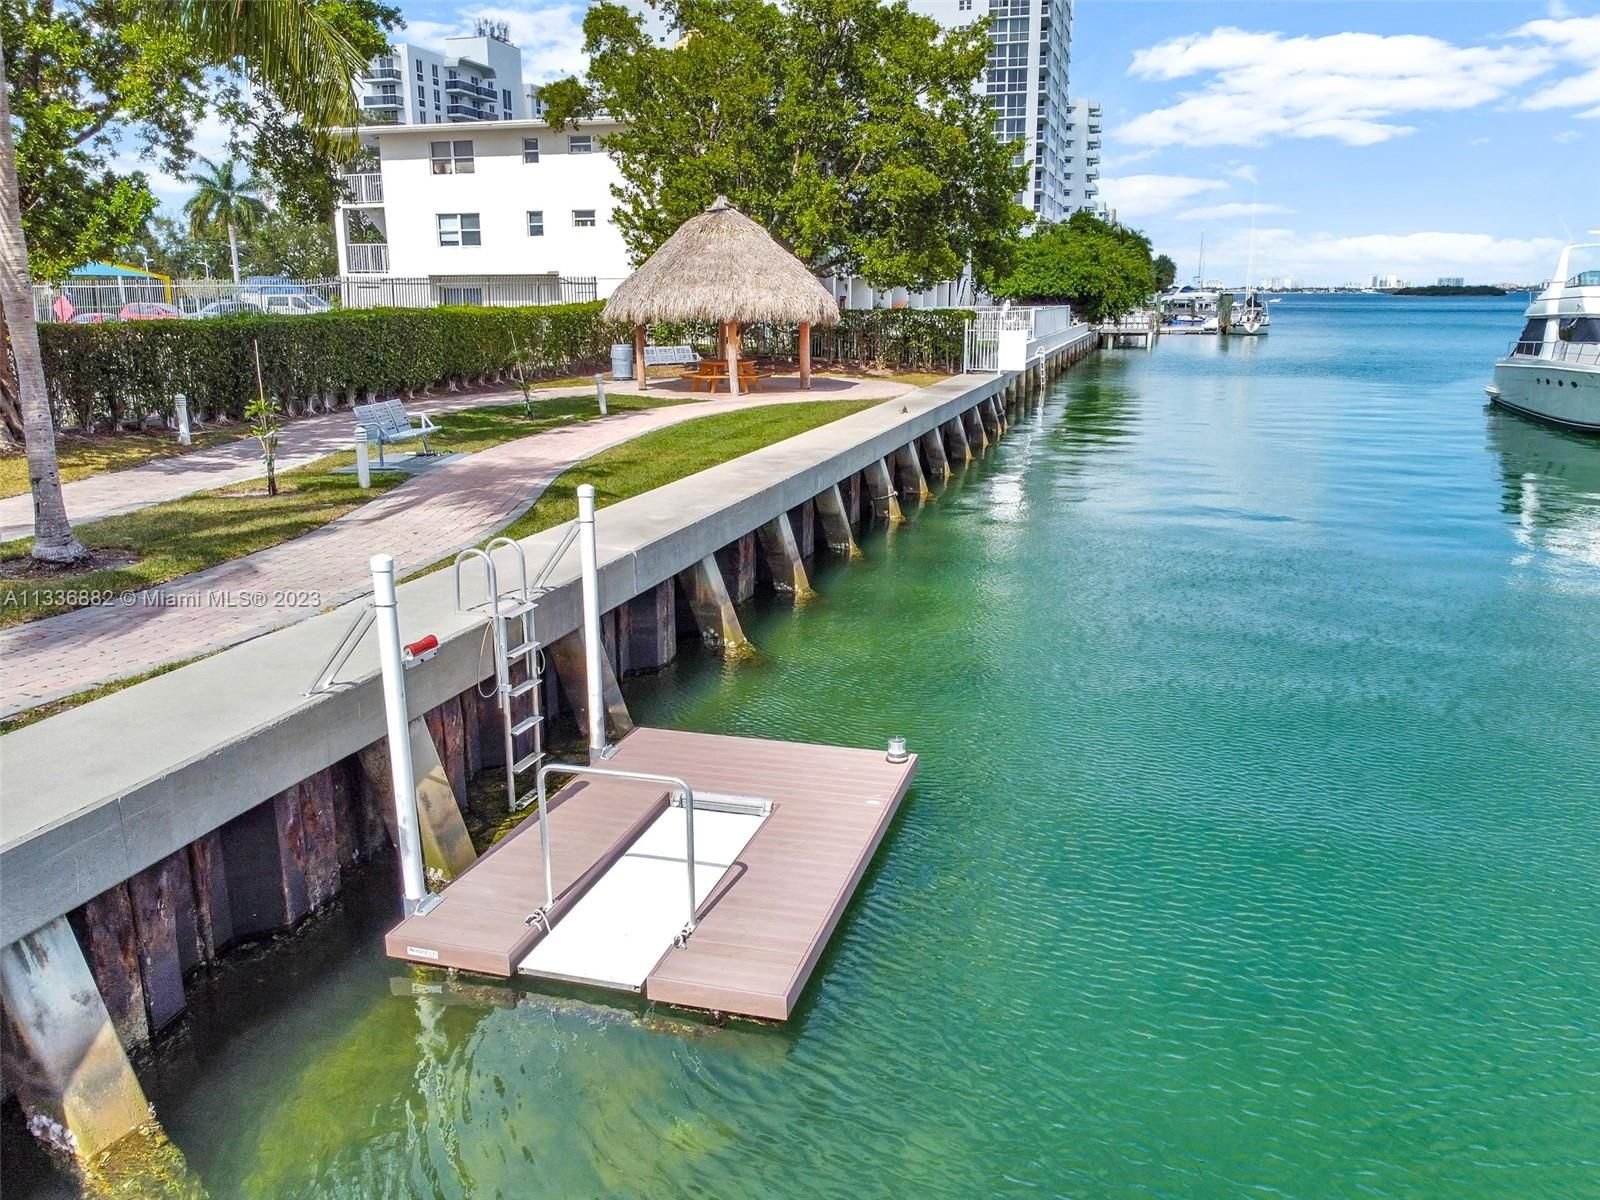 Real estate property located at 7900 Harbor Island Dr PH1, Miami-Dade County, North Bay Village, FL